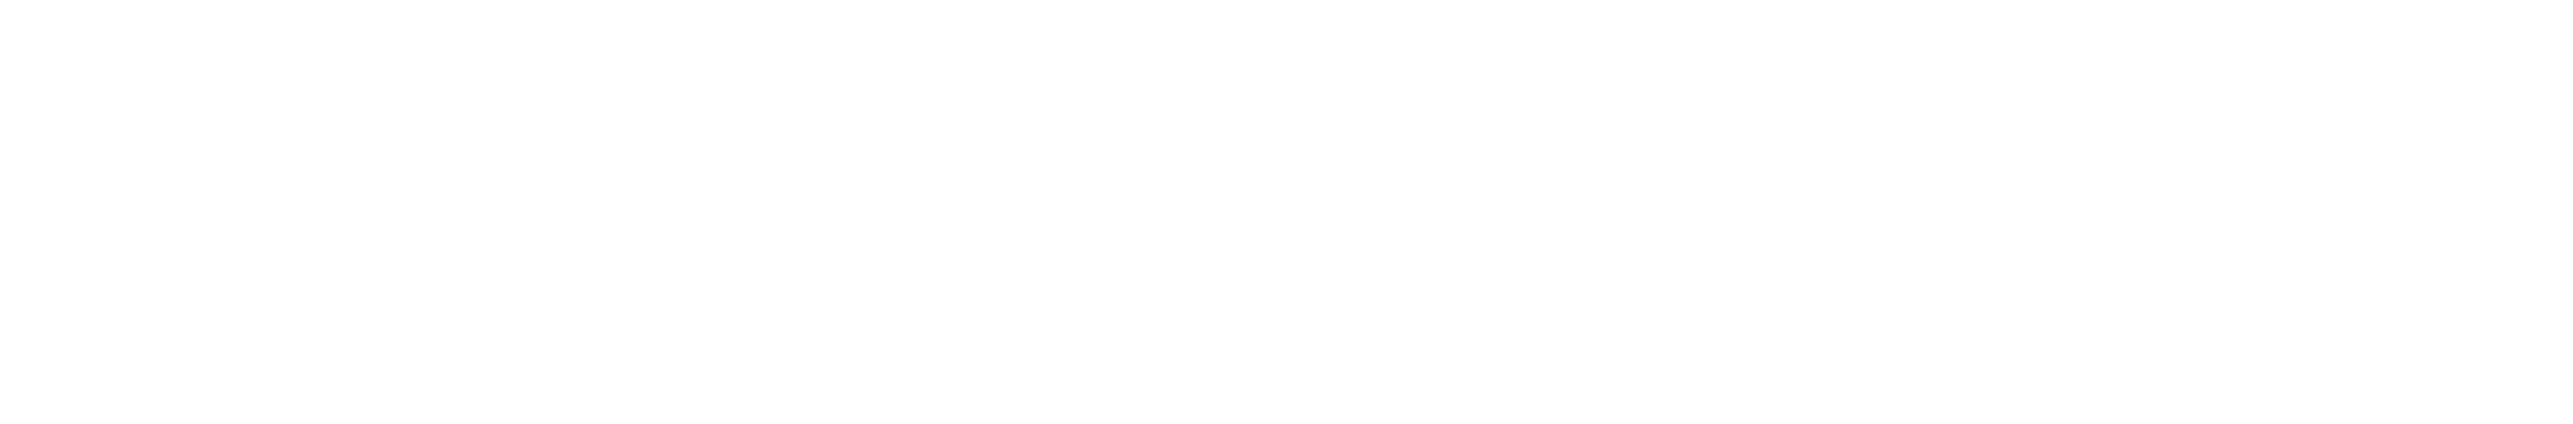 Amazon Buy Button